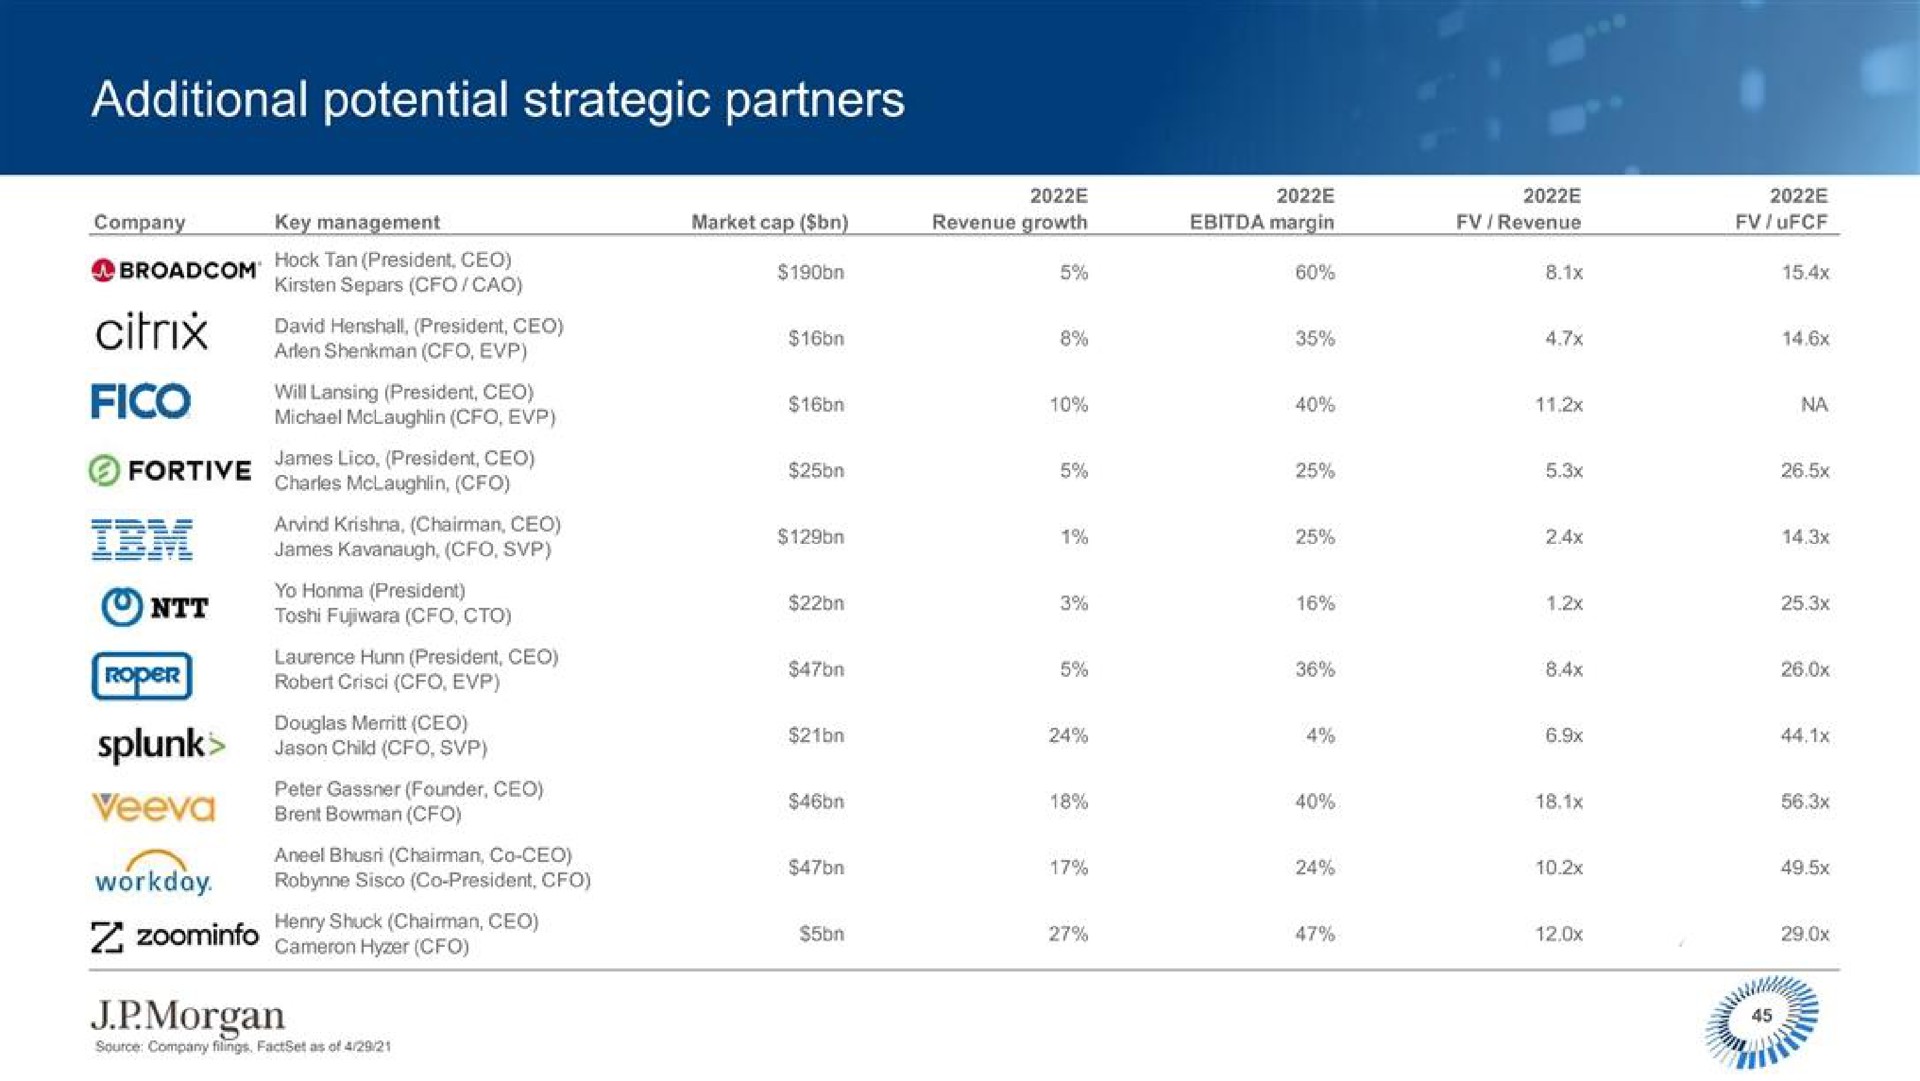 additional potential strategic partners | J.P.Morgan